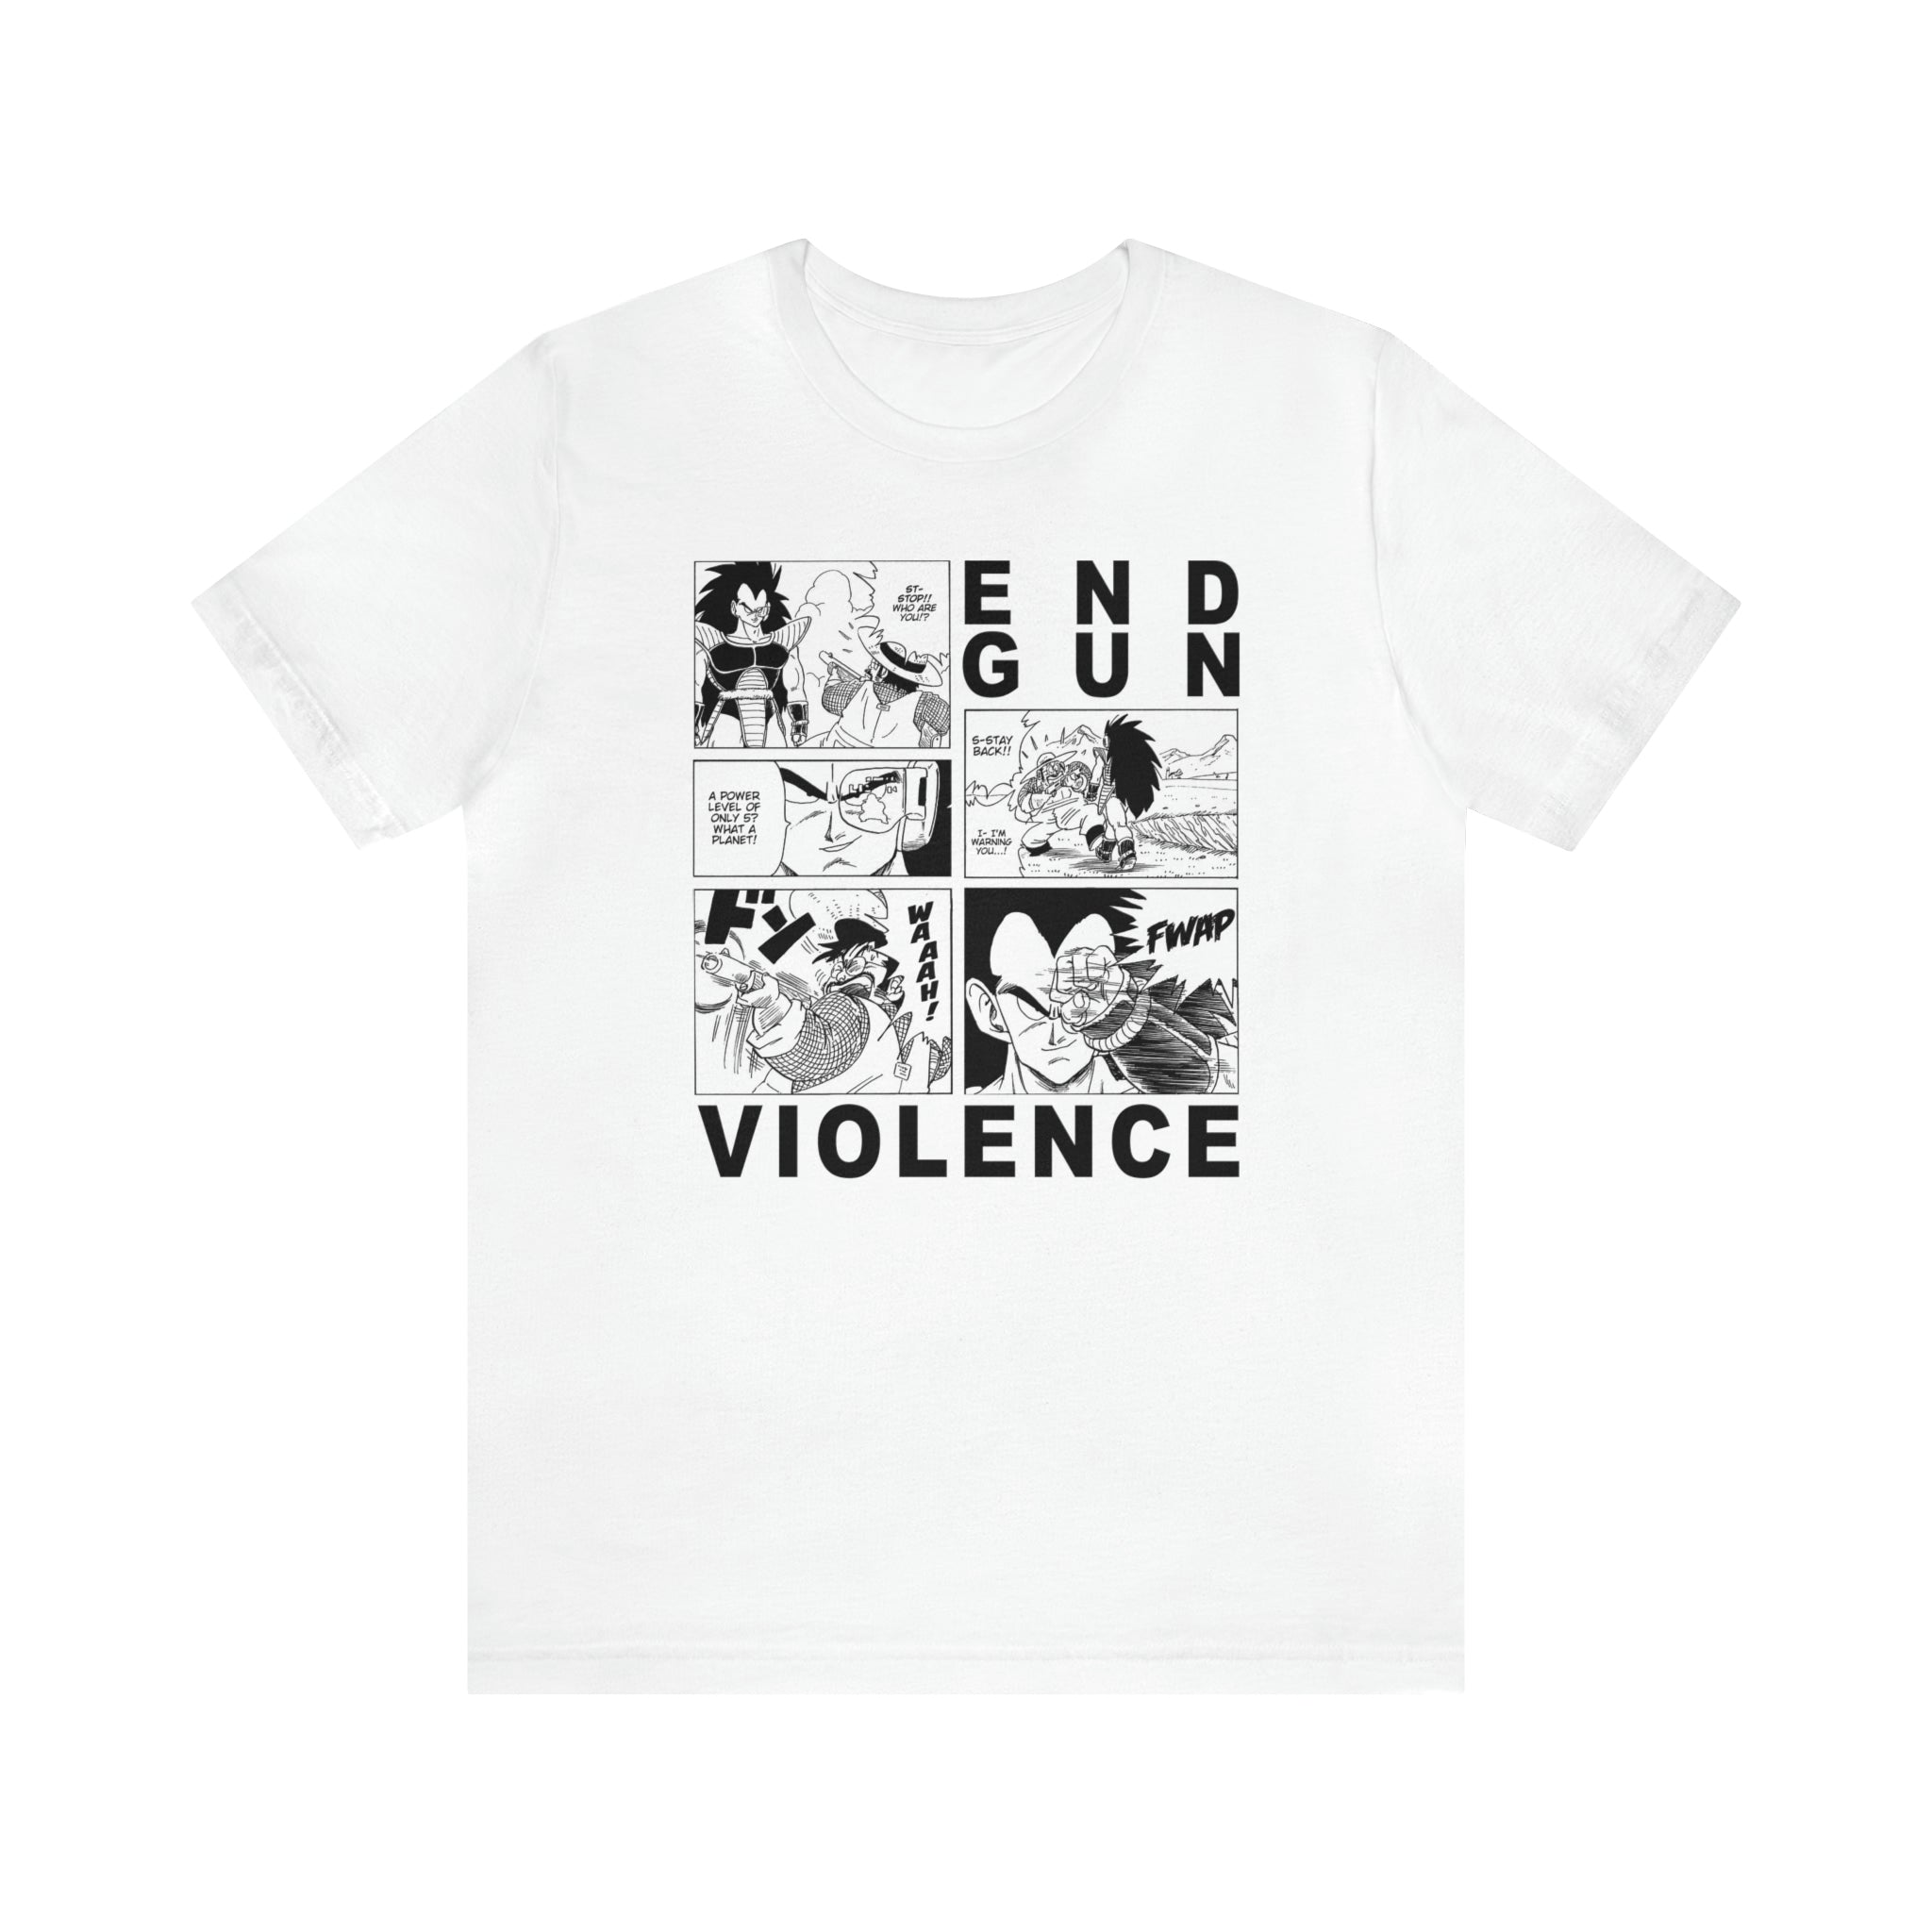 End Gun Violence T-shirt